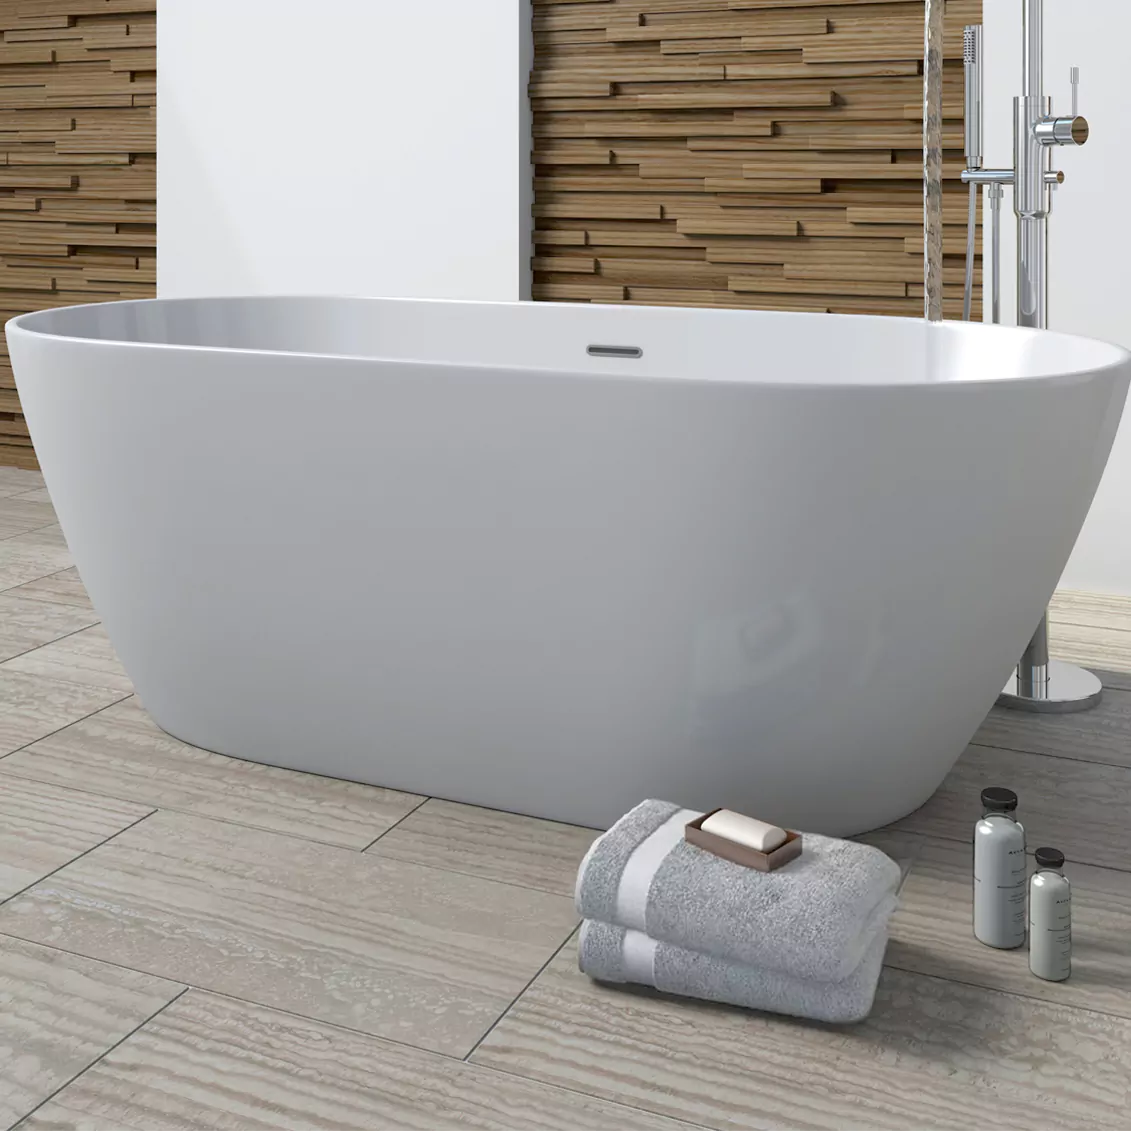 Tissino Angelo Acrylic Freestanding Bath, White 1500x750mm close up of bathtub, in a bathroom interior space